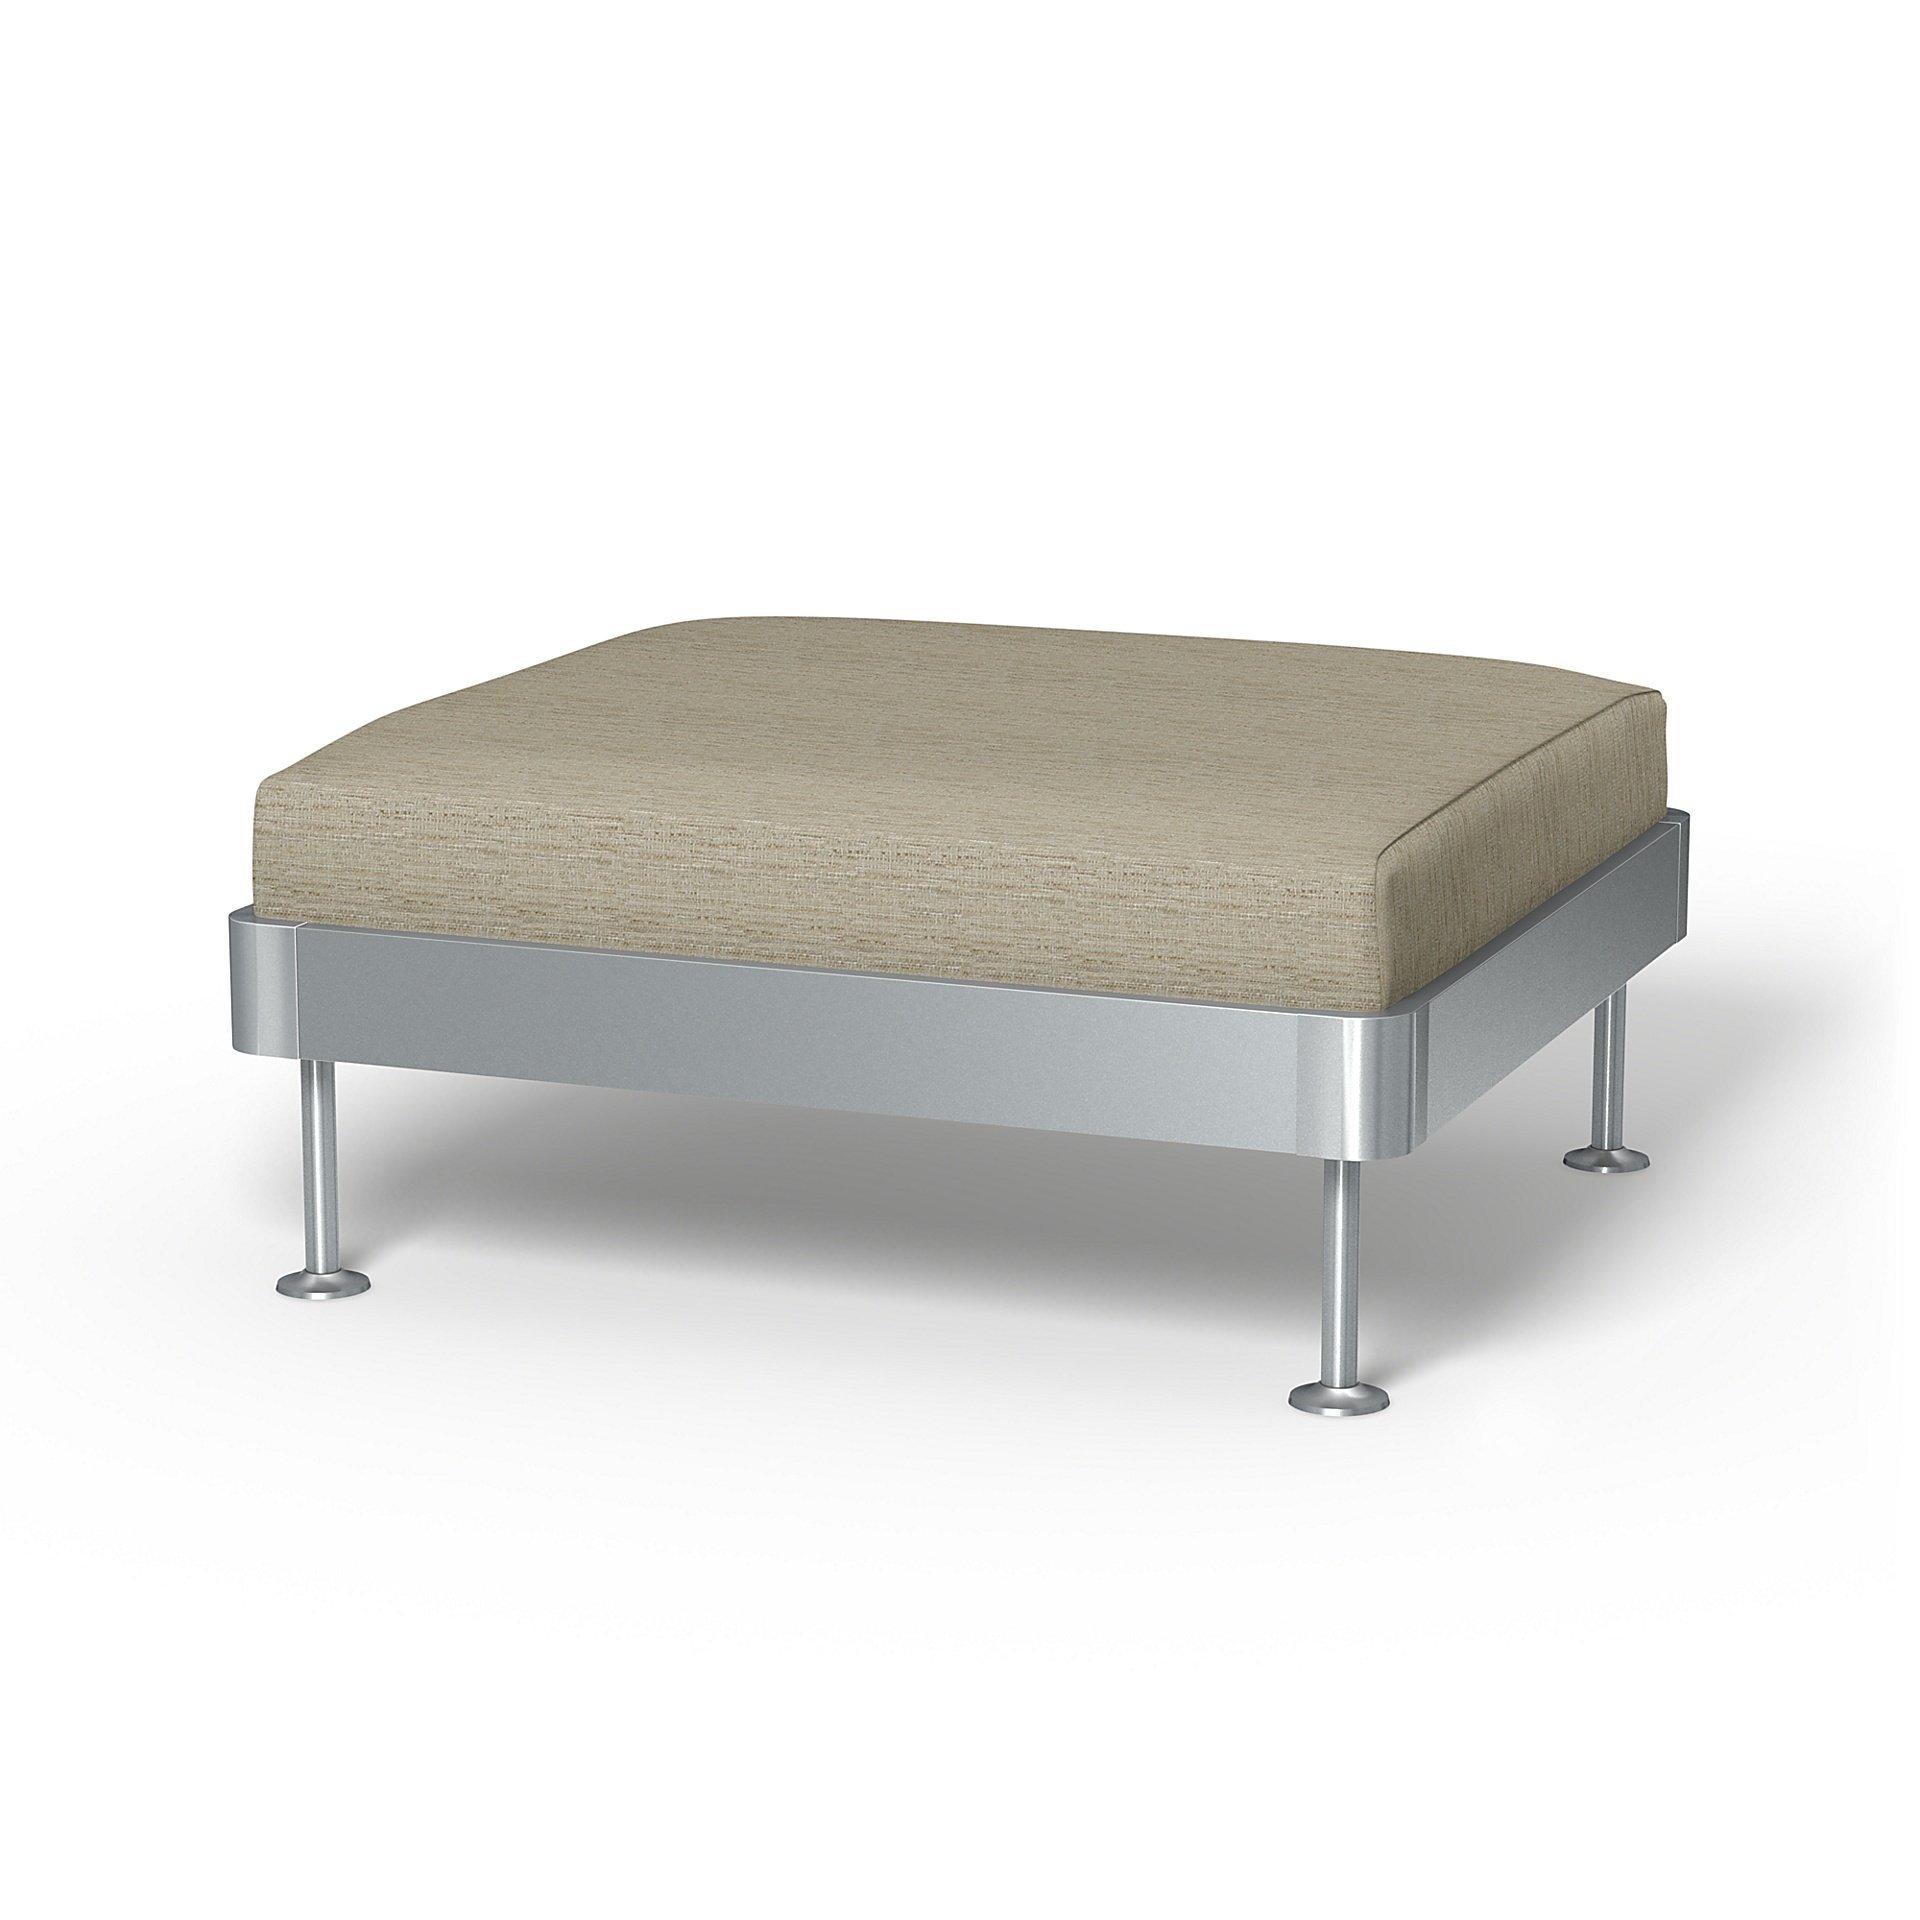 IKEA - Delaktig 1 Seat Platform Cover, Light Sand, Boucle & Texture - Bemz